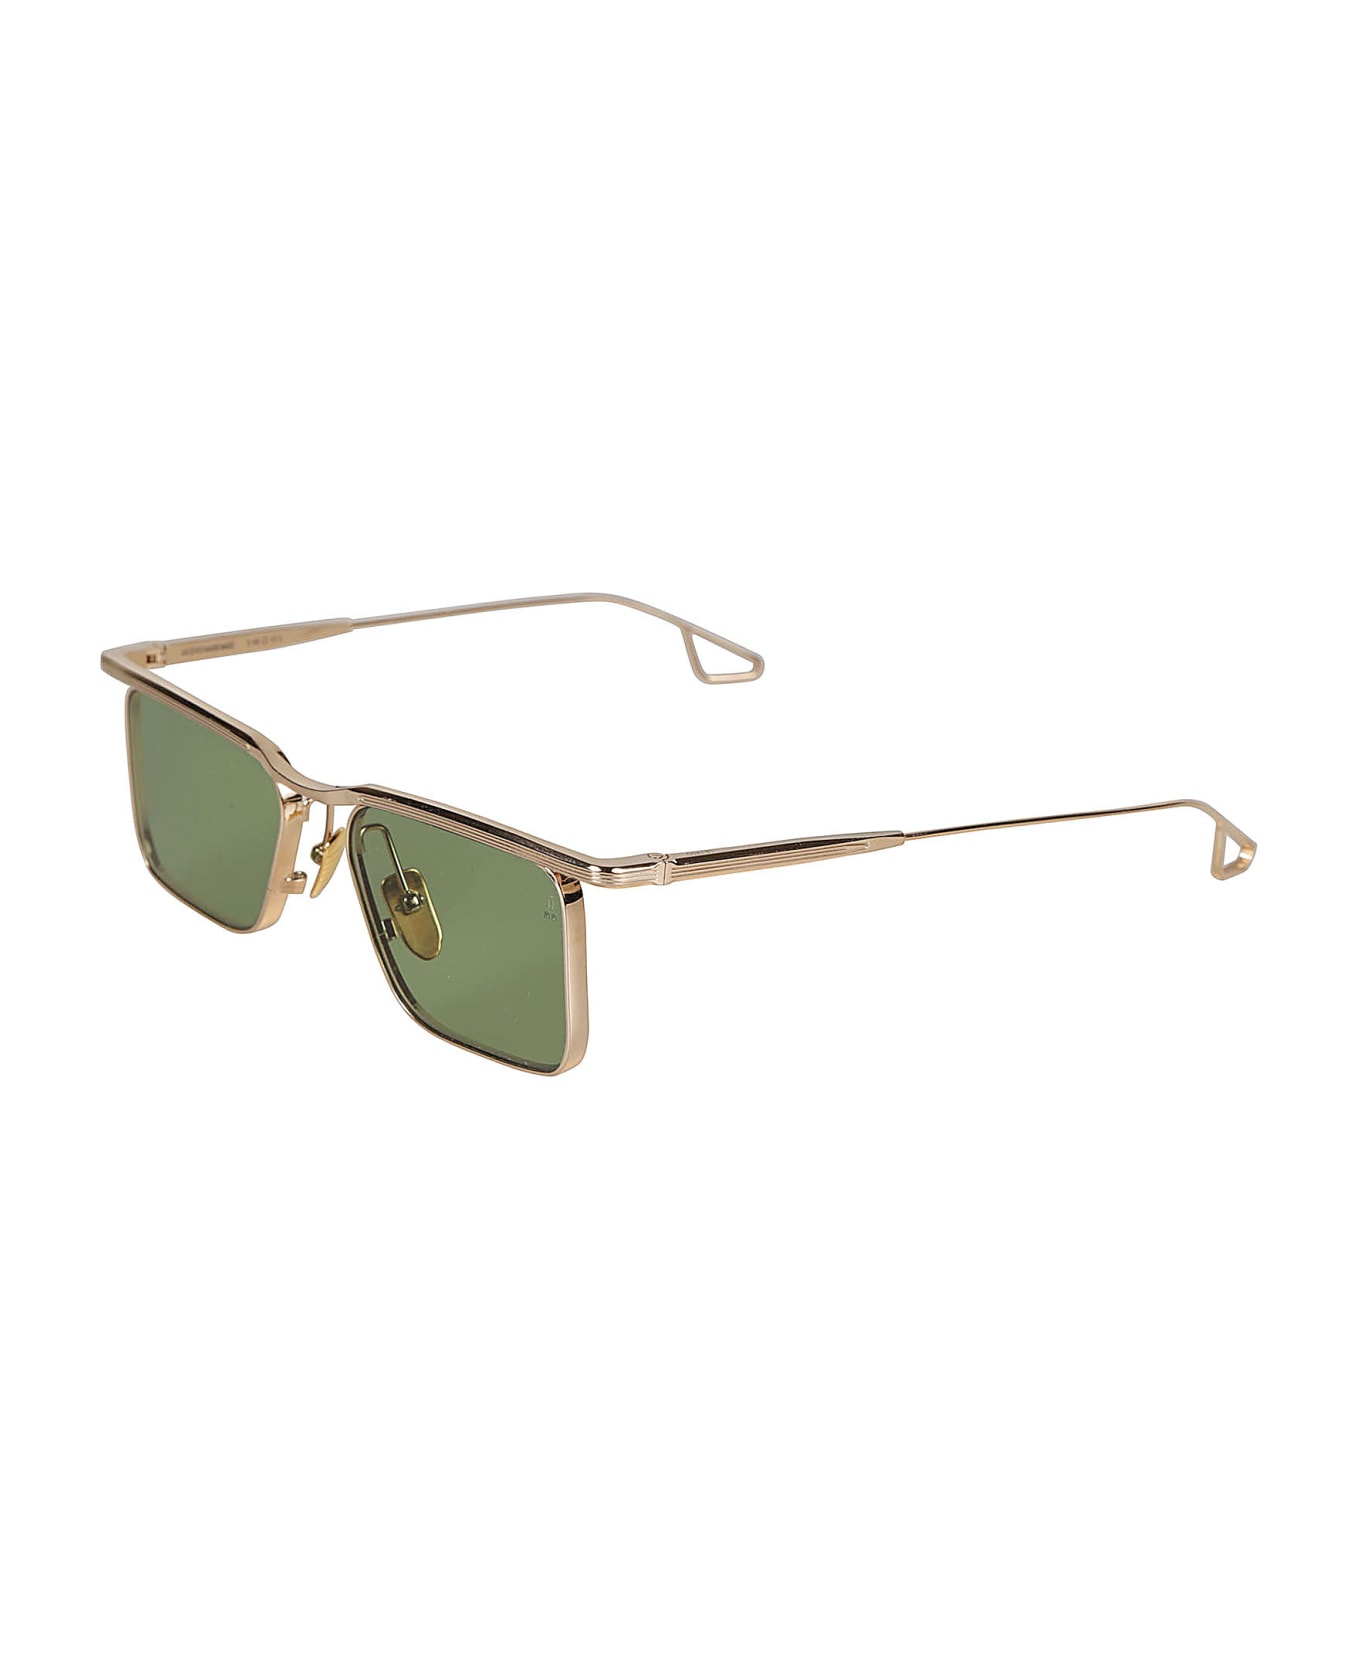 Jacques Marie Mage Beauregard buy Sunglasses buy Sunglasses - Gold